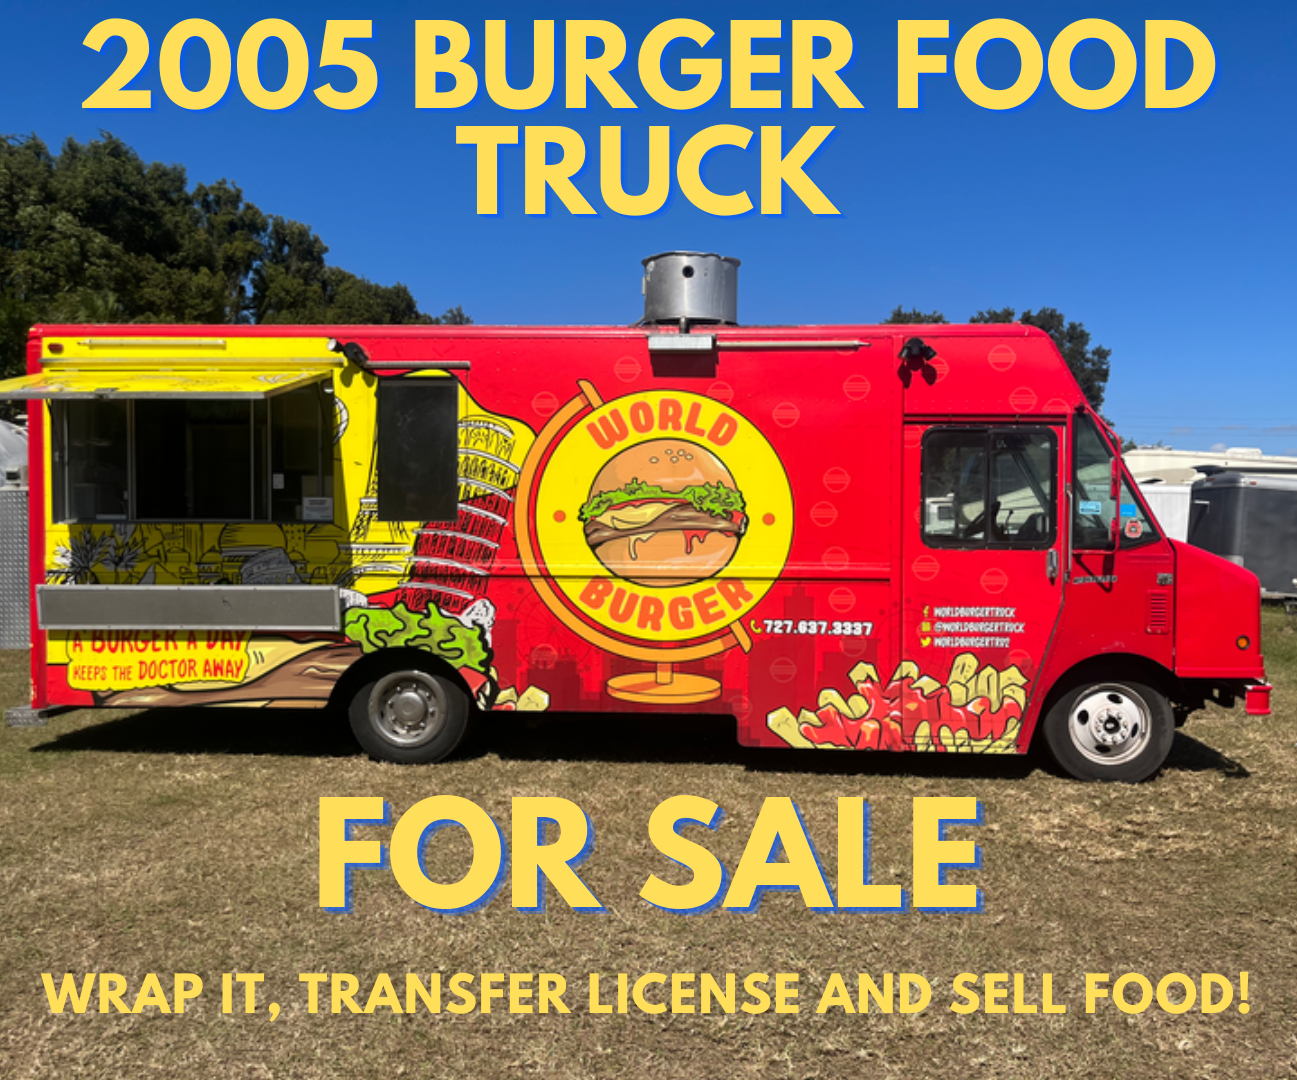 Burger Food Truck For Sale